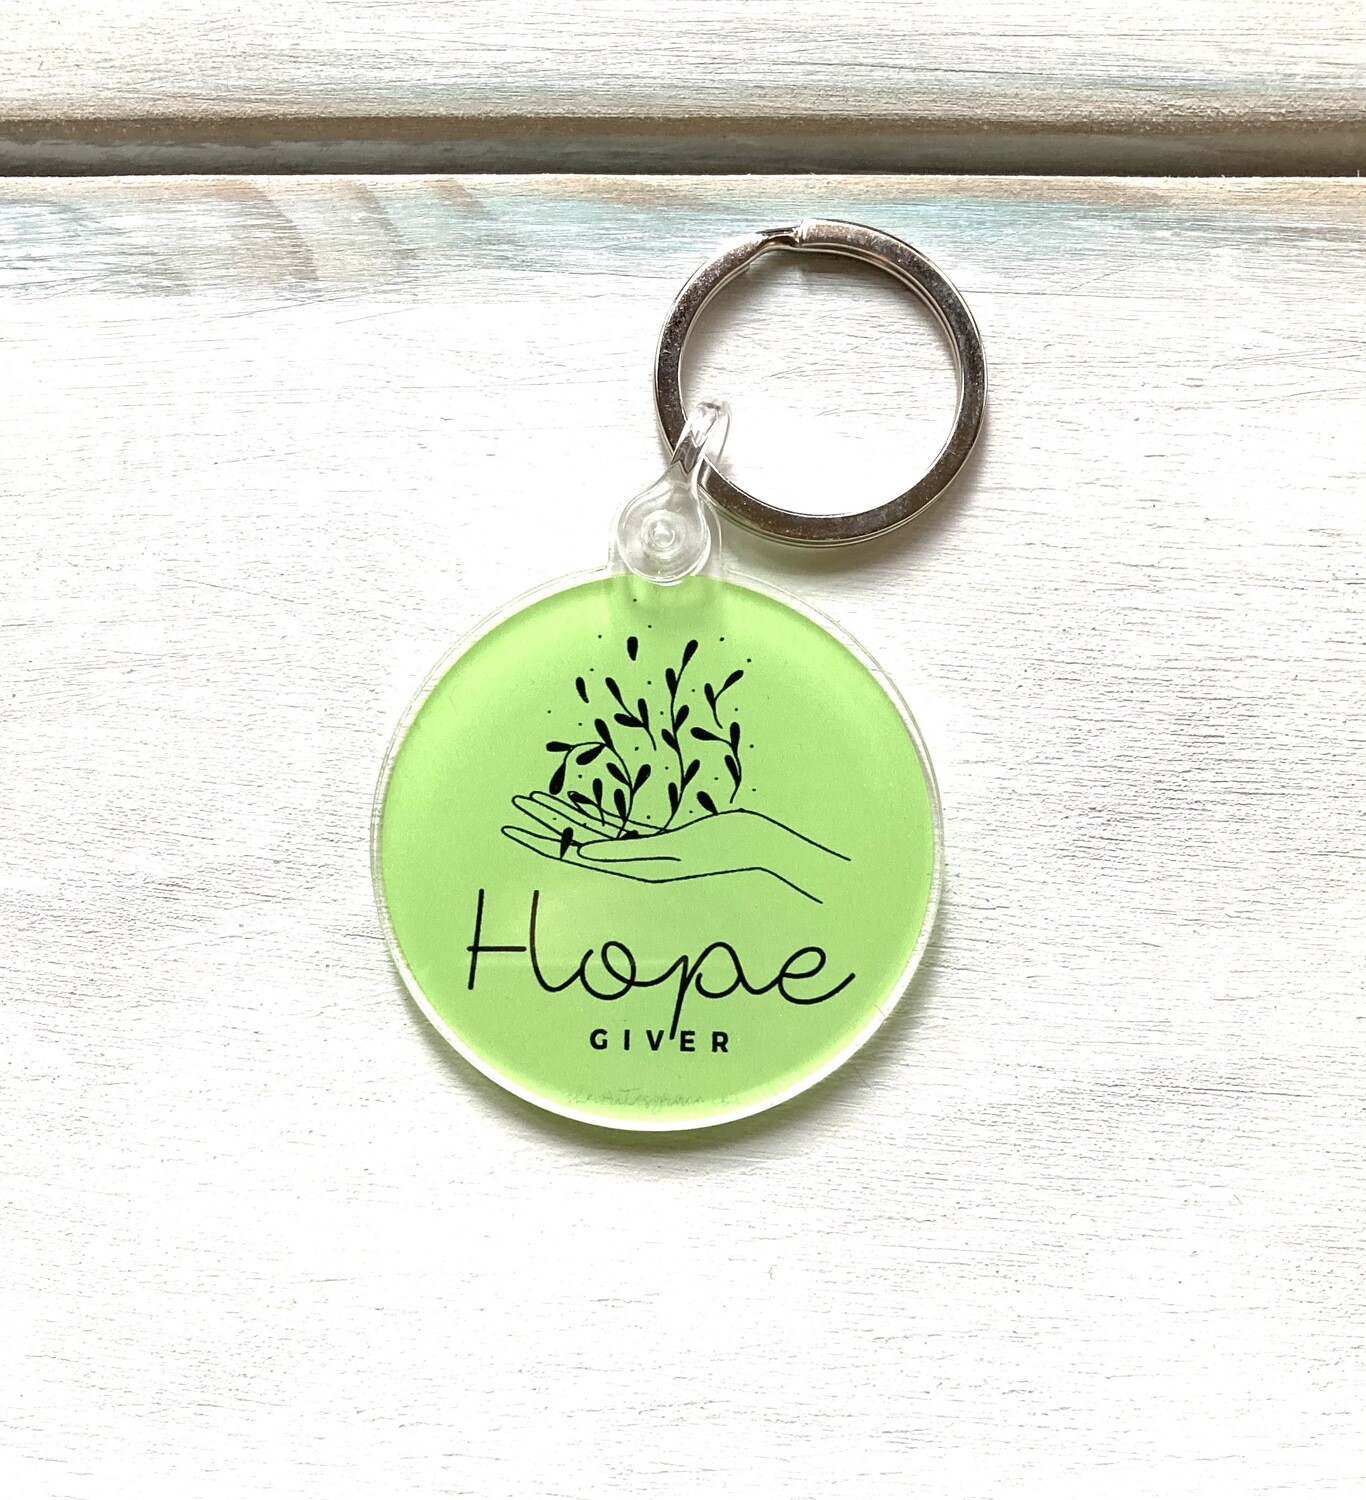 Hope Giver Keychain